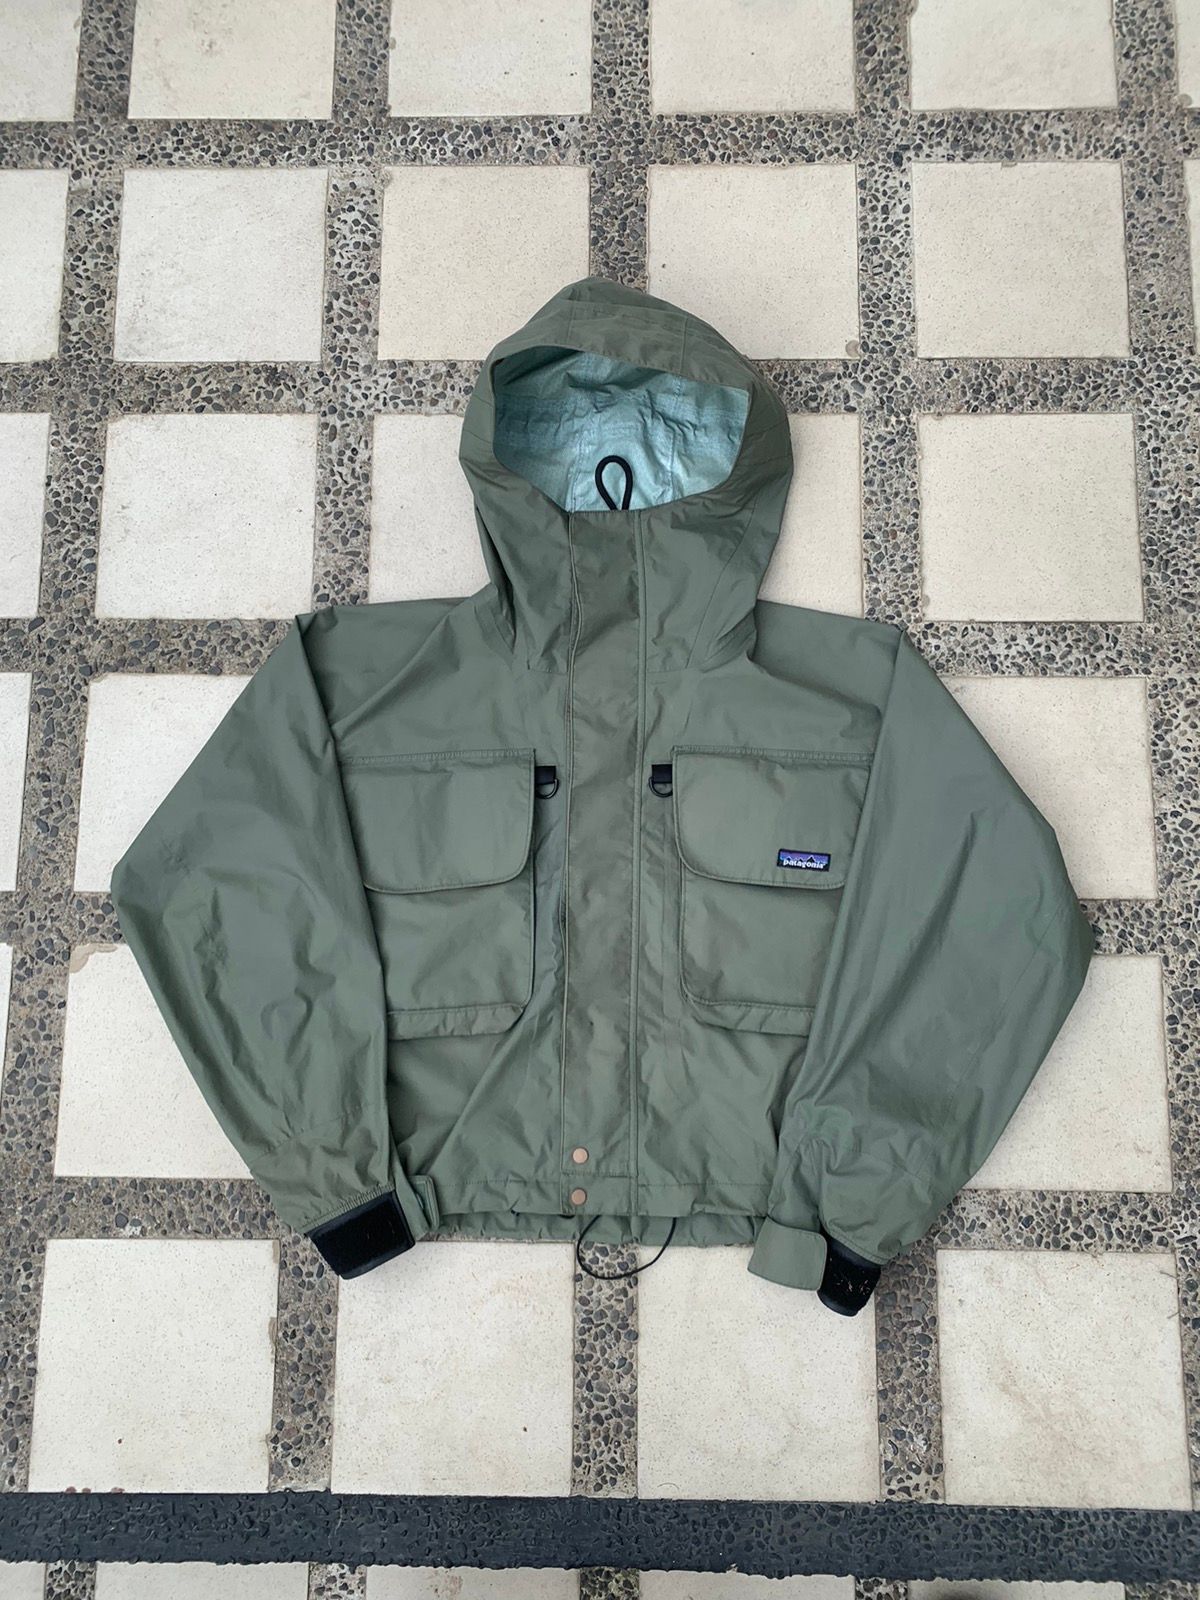 Vintage Patagonia SST fishing jacket